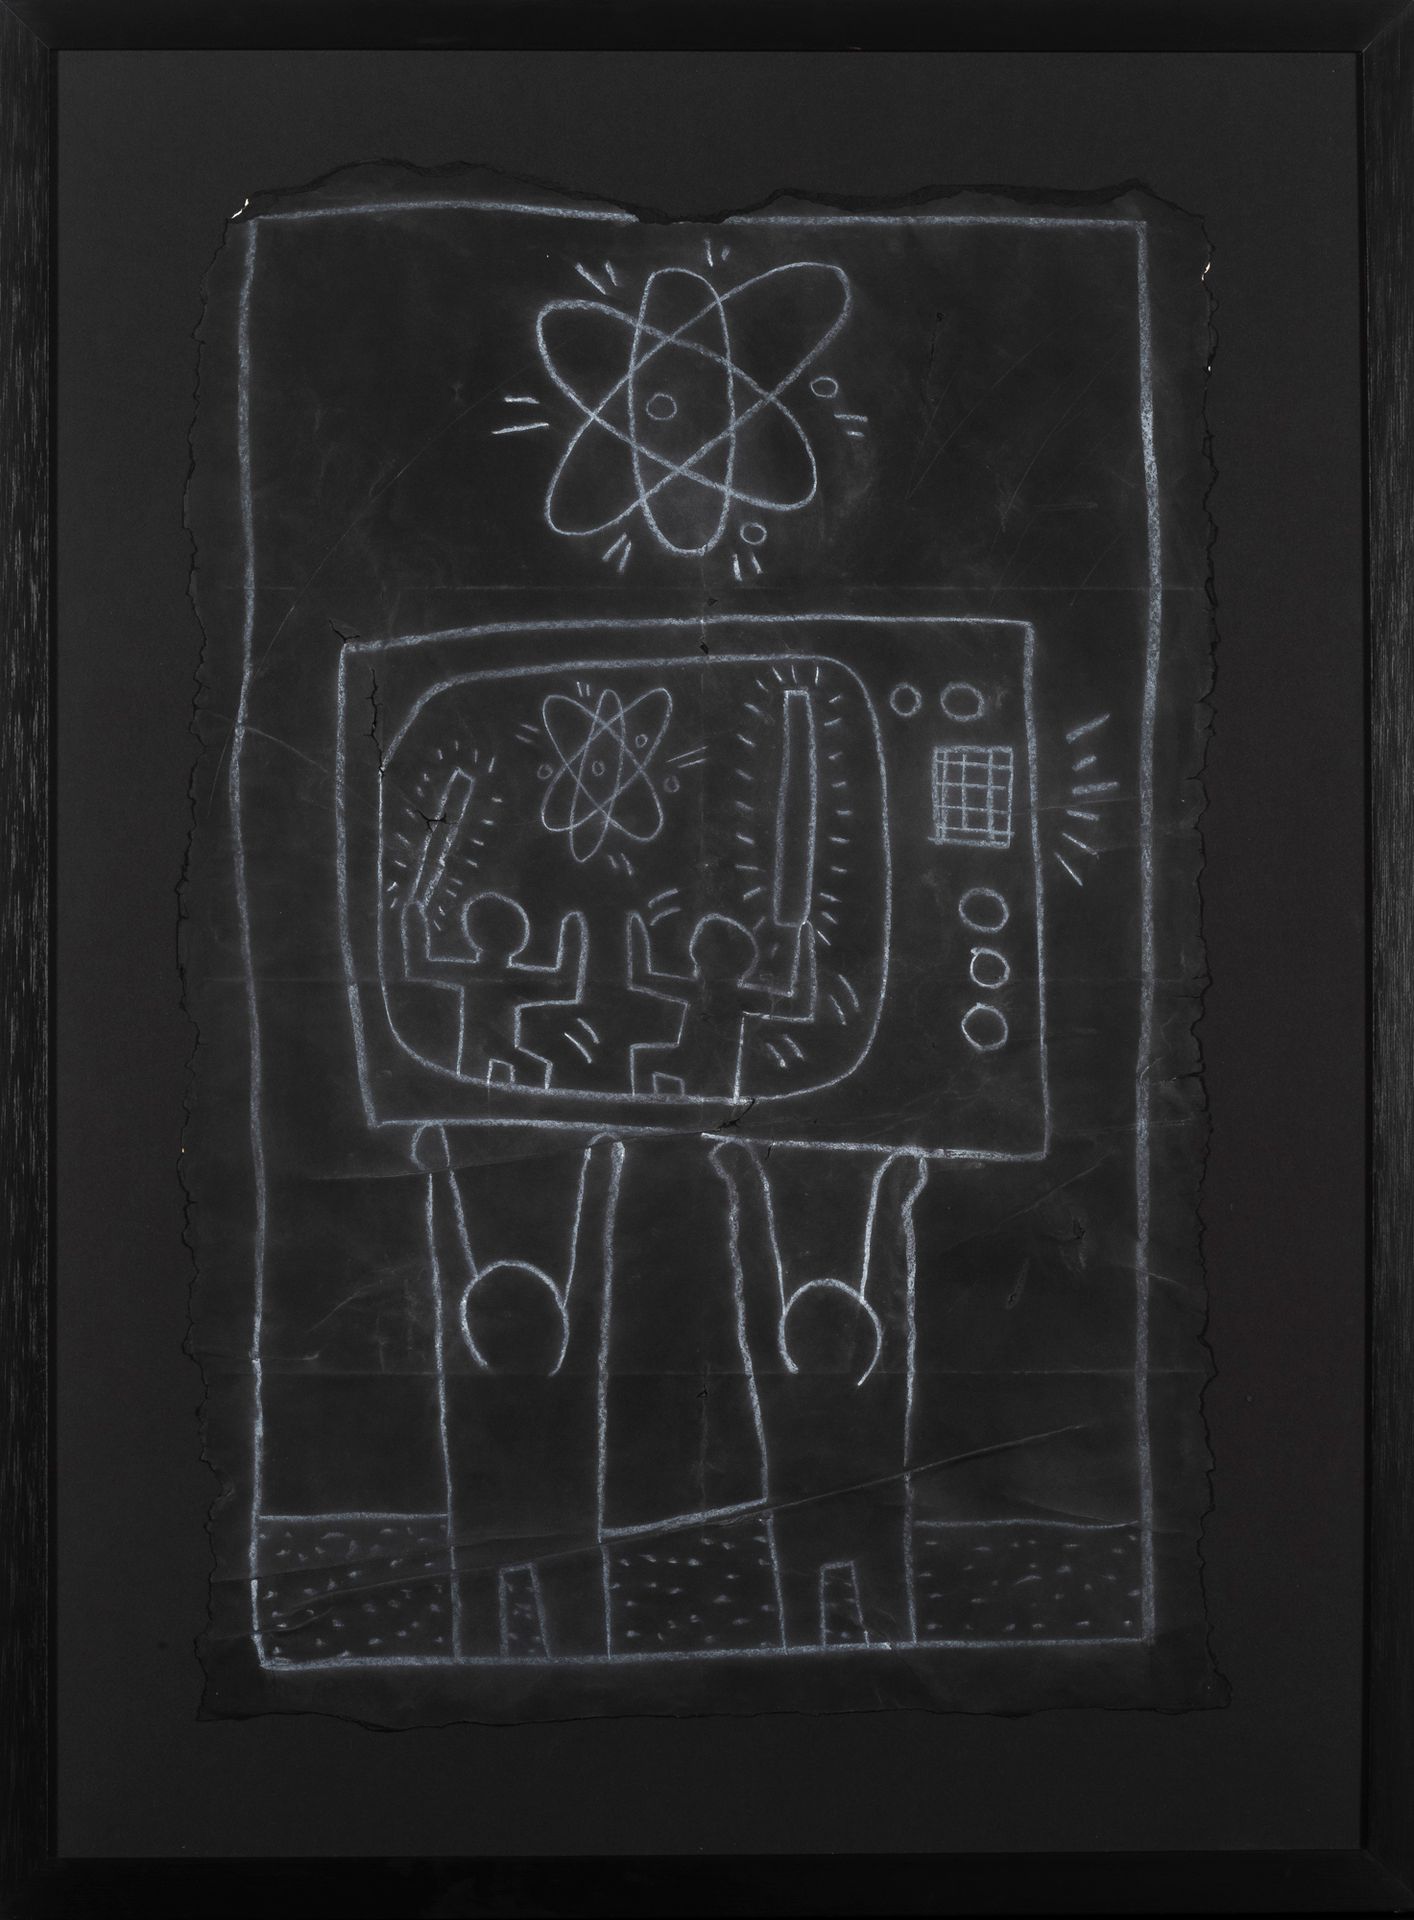 Keith Haring (1958-1990) Subway Drawing
Gesso su carta nera.
Krijt op zwart papi&hellip;